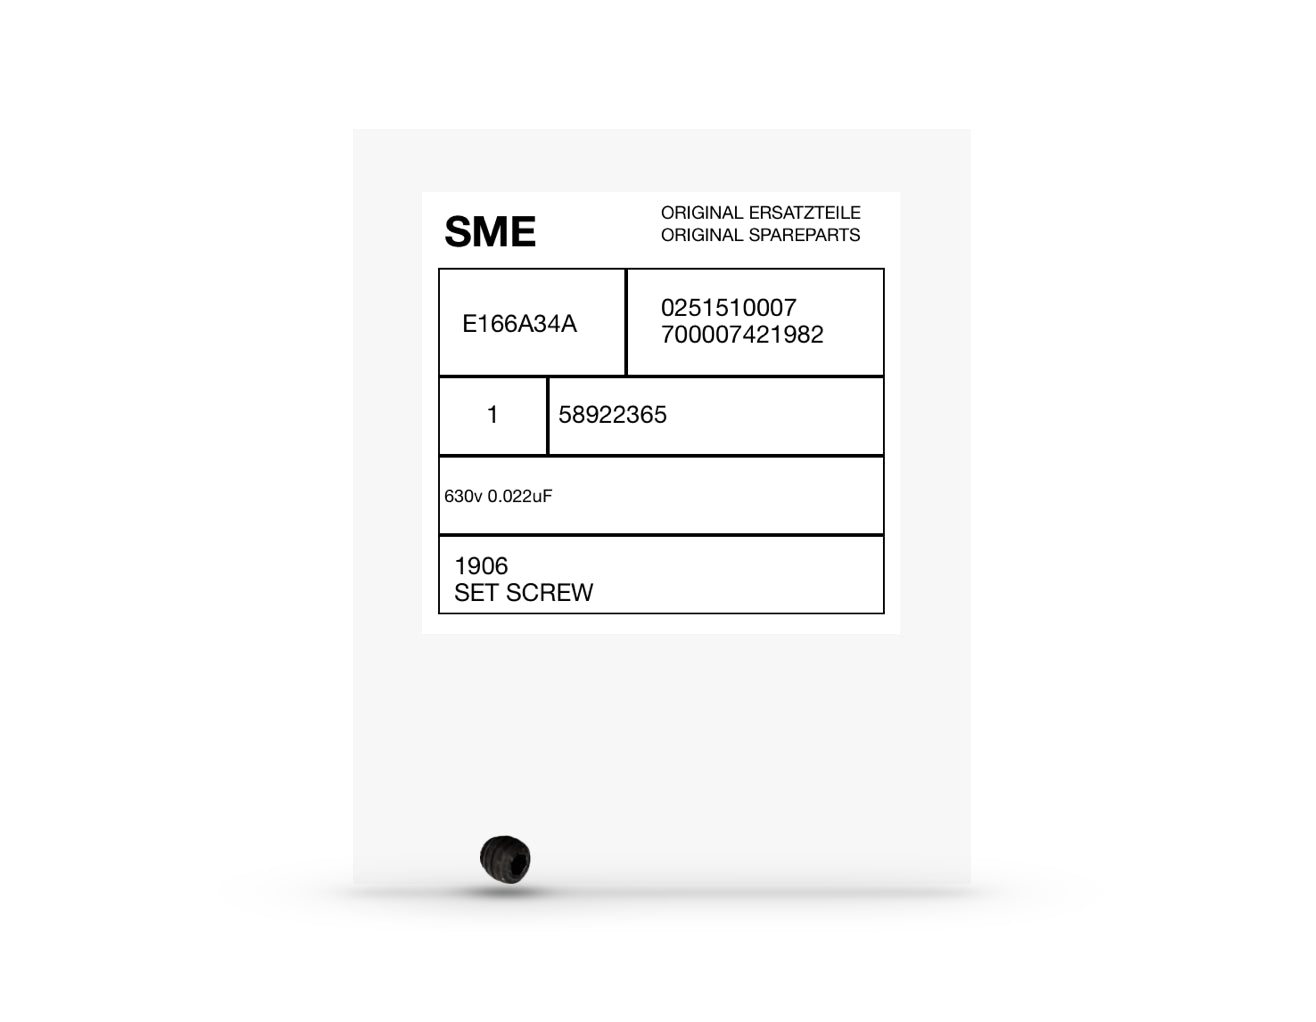 SME 3009 3012 II Counterweight Set Screw